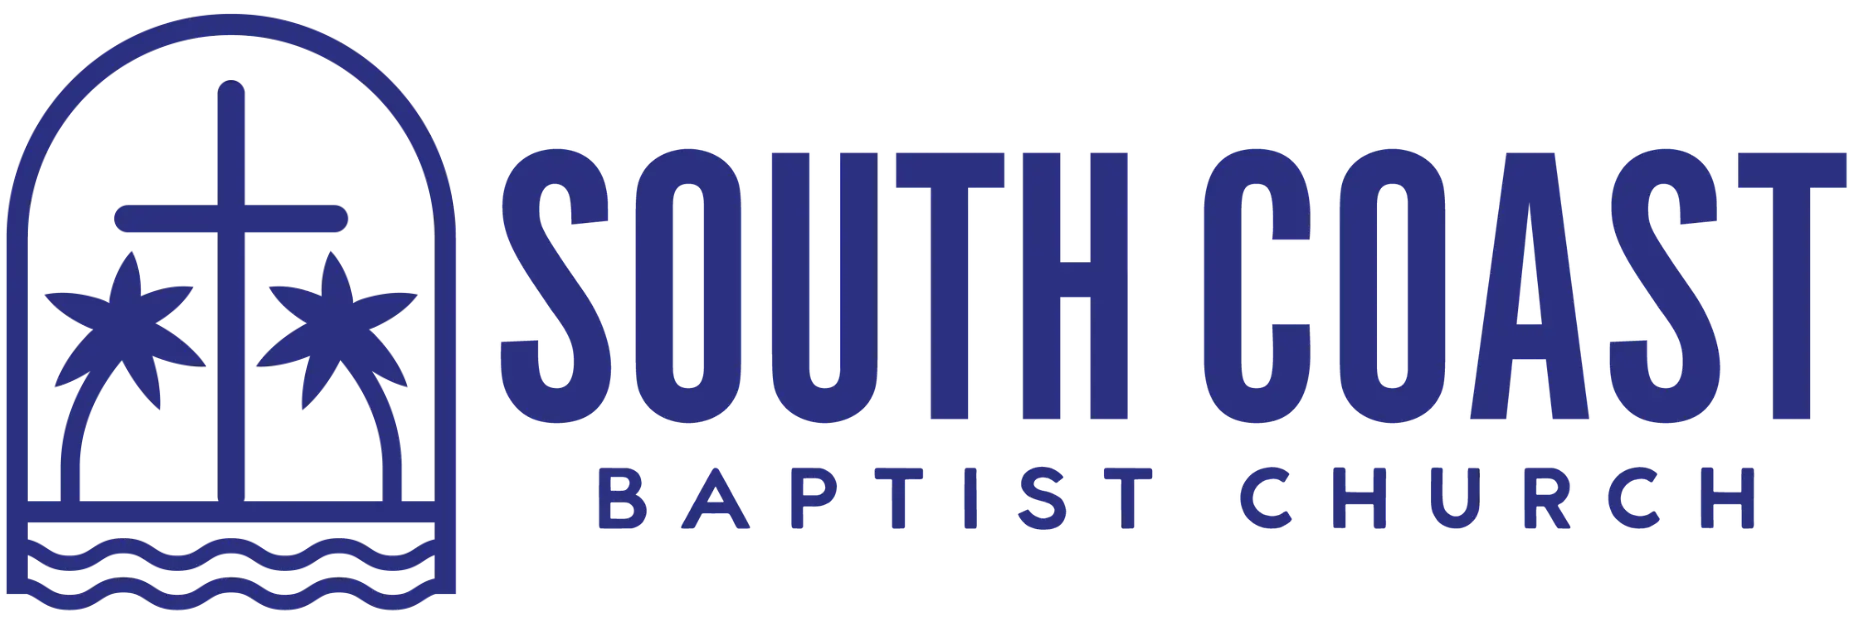 South Coast Baptist Church Logo